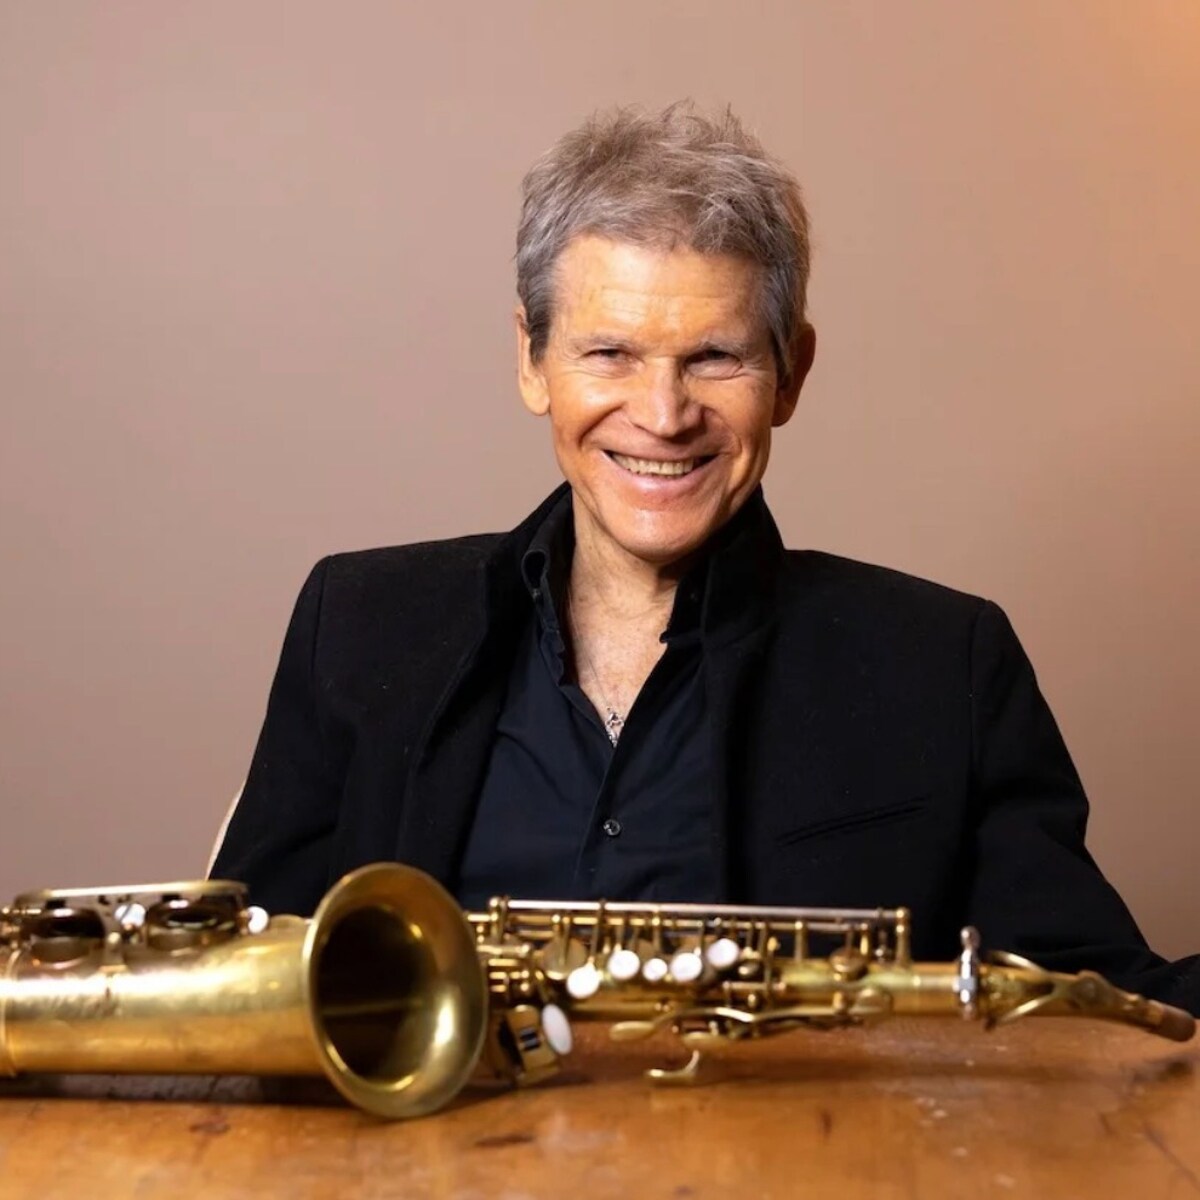 El saxofonista David Sanborn